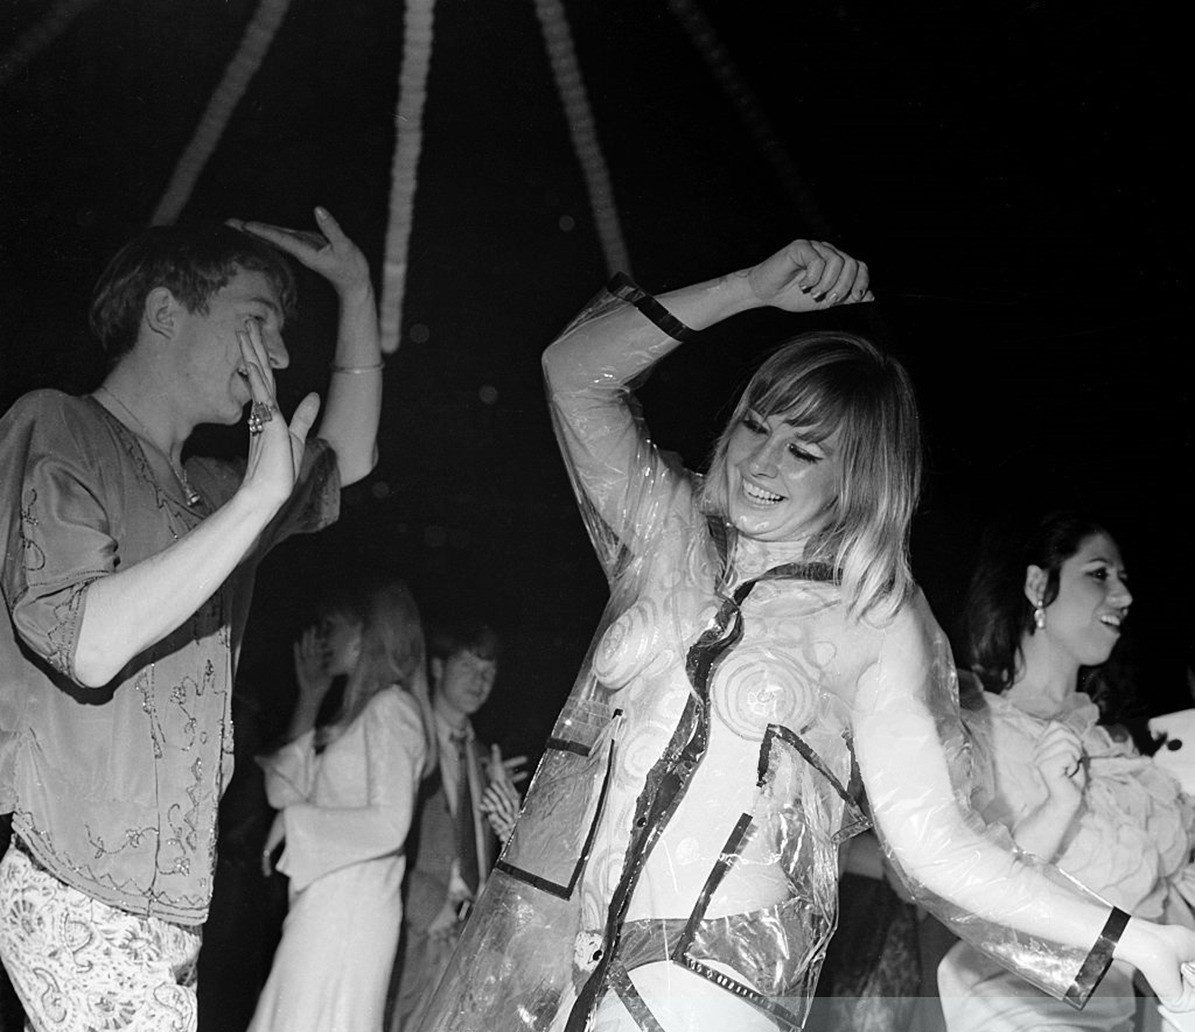 the Cheetah night club in Los Angeles in 1967